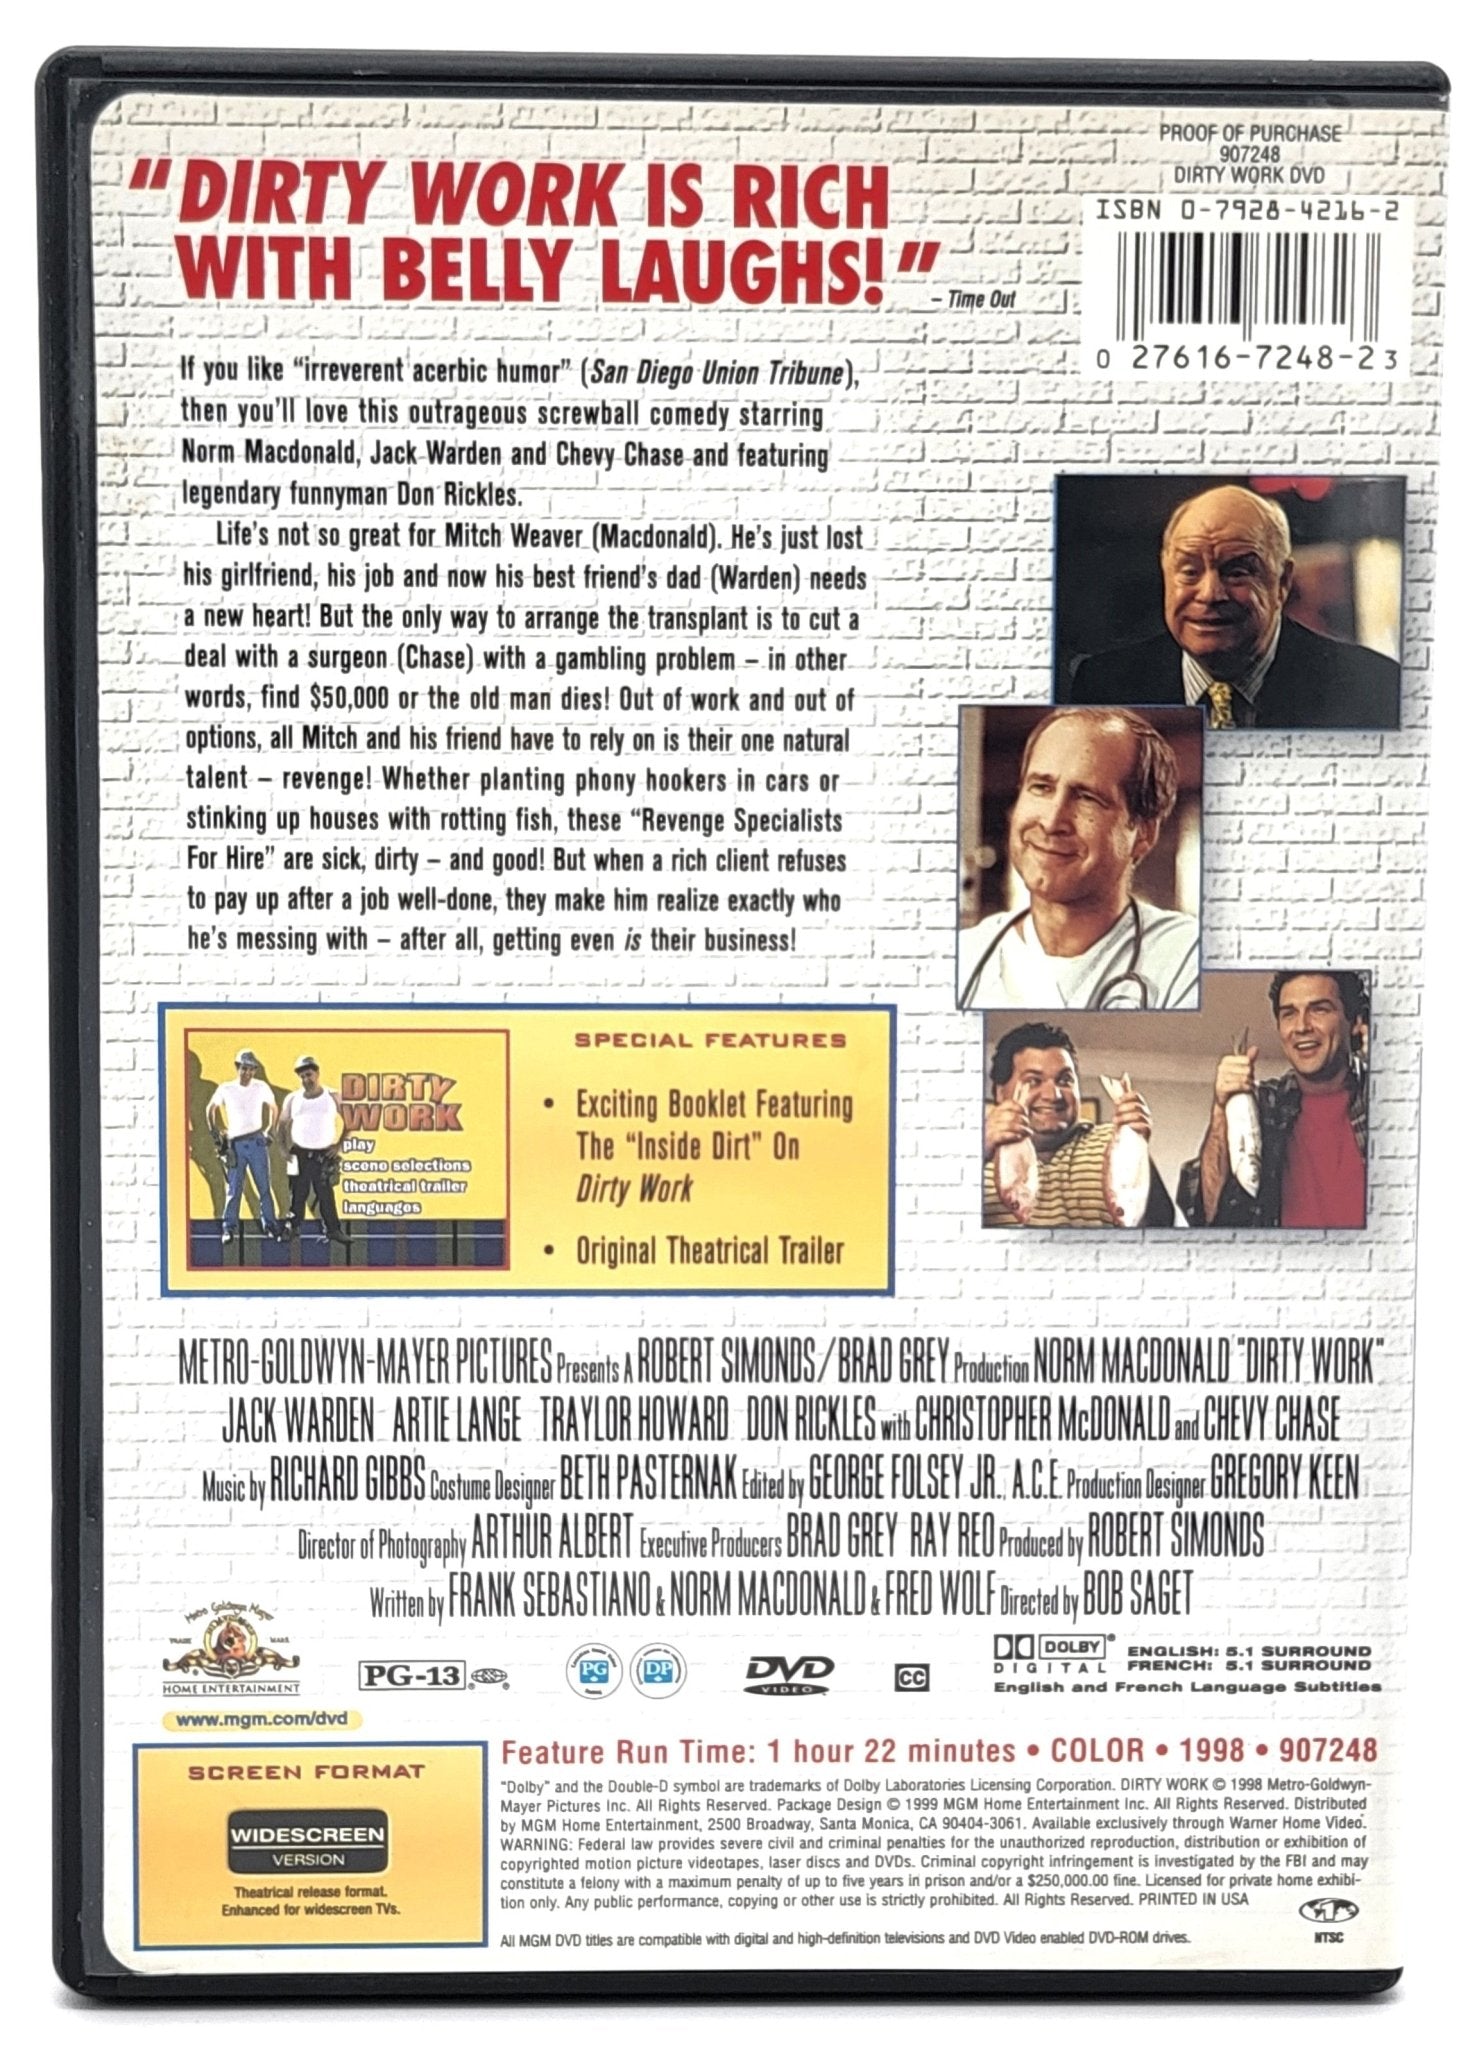 MGM - Dirty Work | DVD | Widescreen - DVD - Steady Bunny Shop